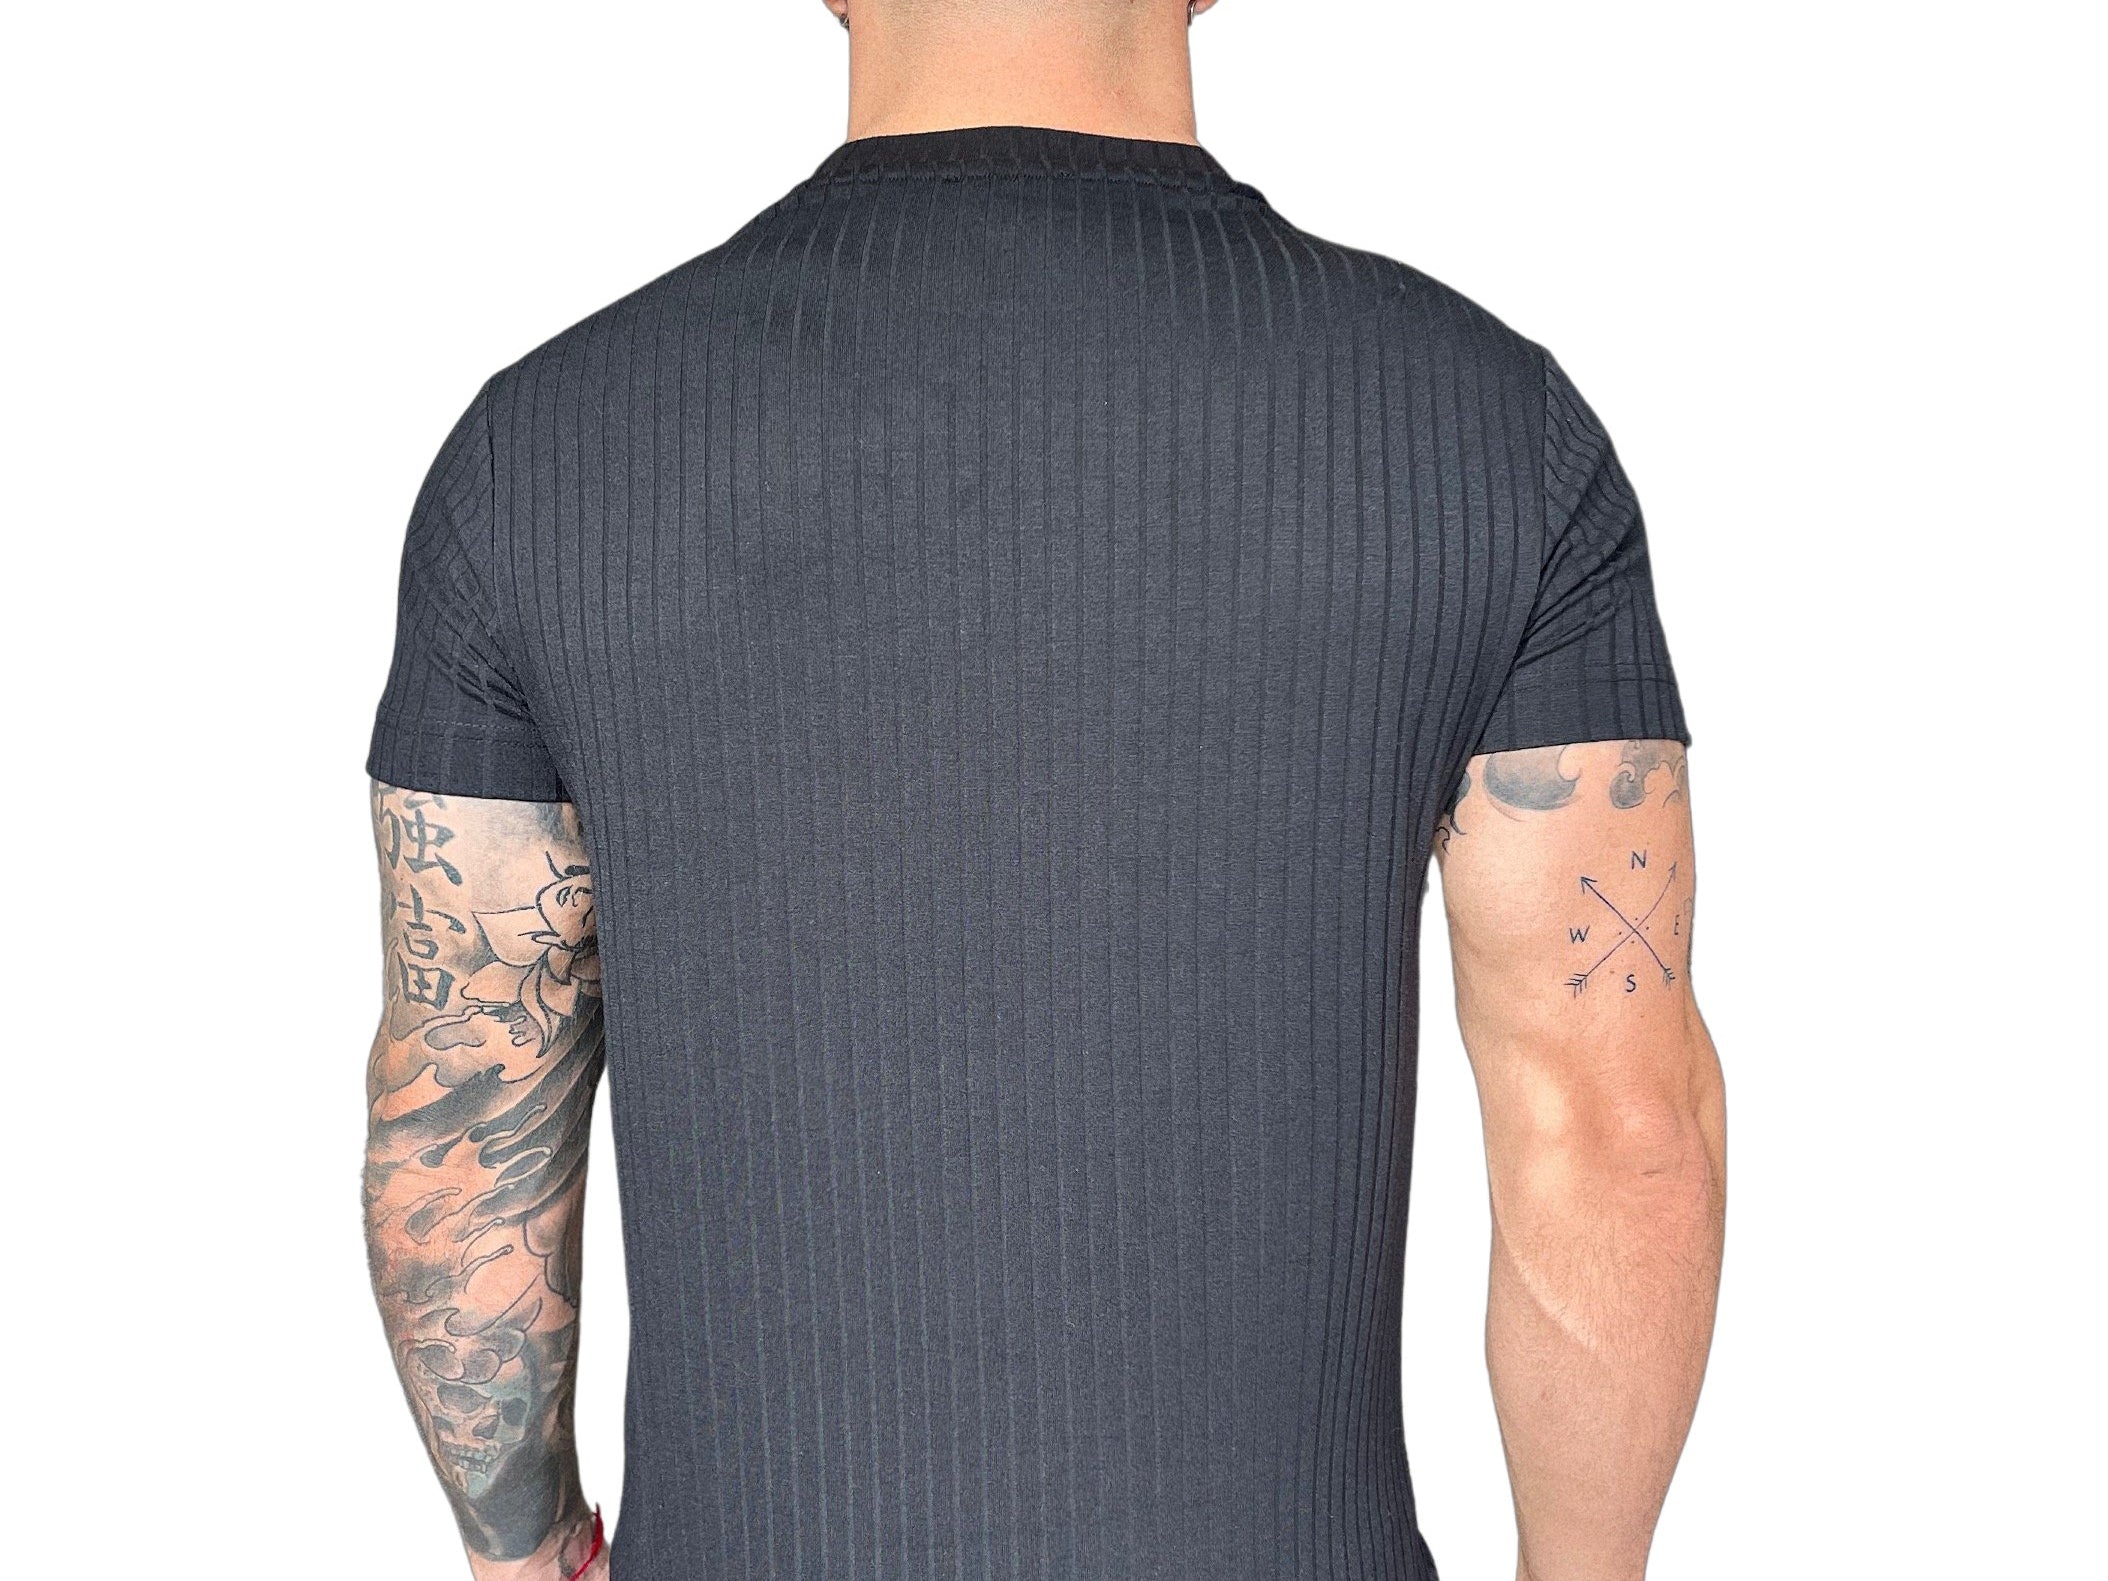 Roisbla - T-shirt for Men - Sarman Fashion - Wholesale Clothing Fashion Brand for Men from Canada